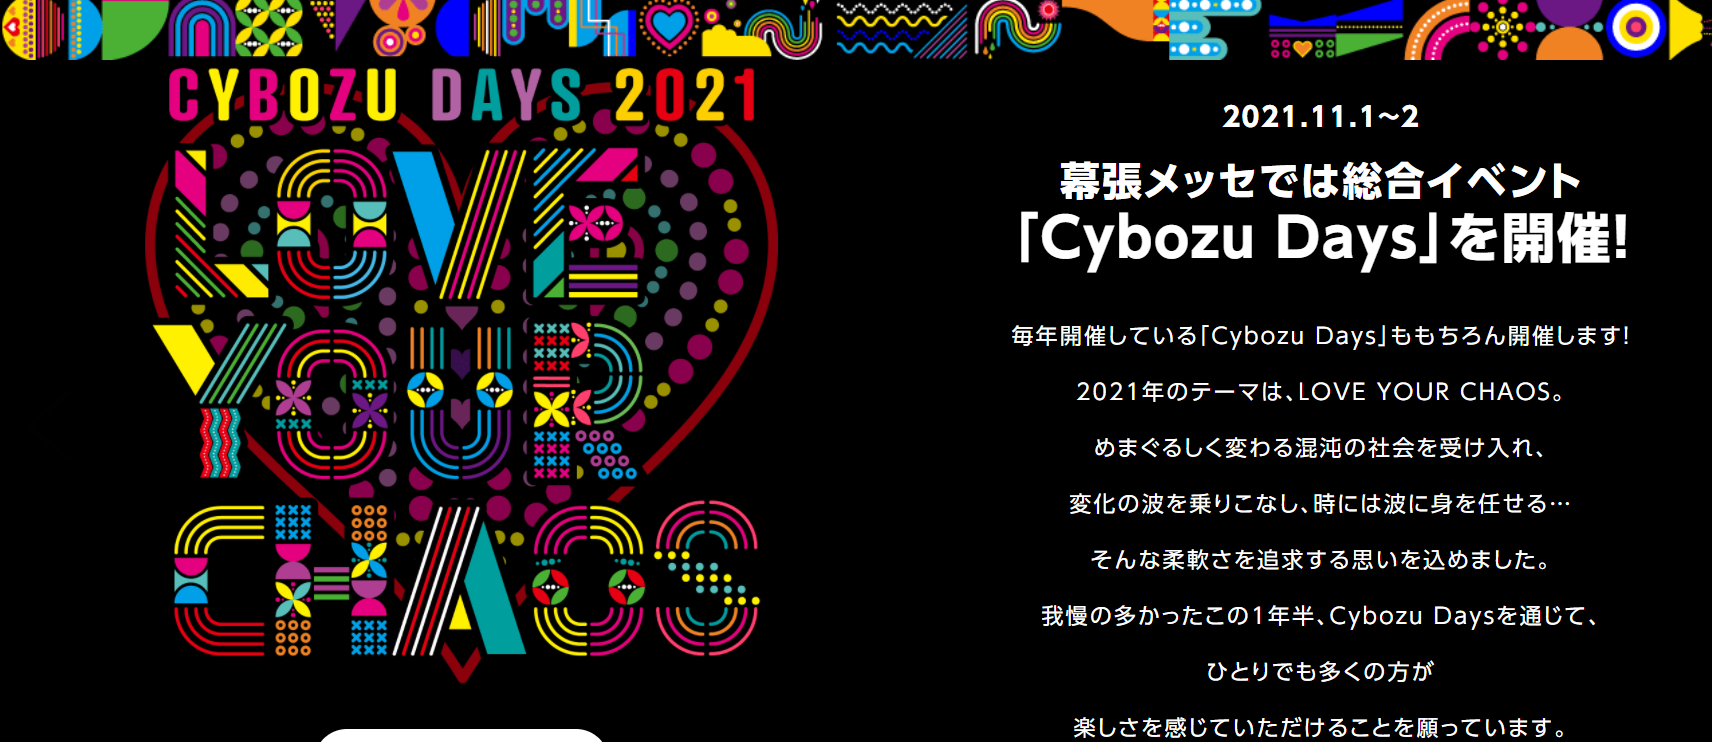 CybozuDayz(サイボウズデイズ)2021に今年も出展します